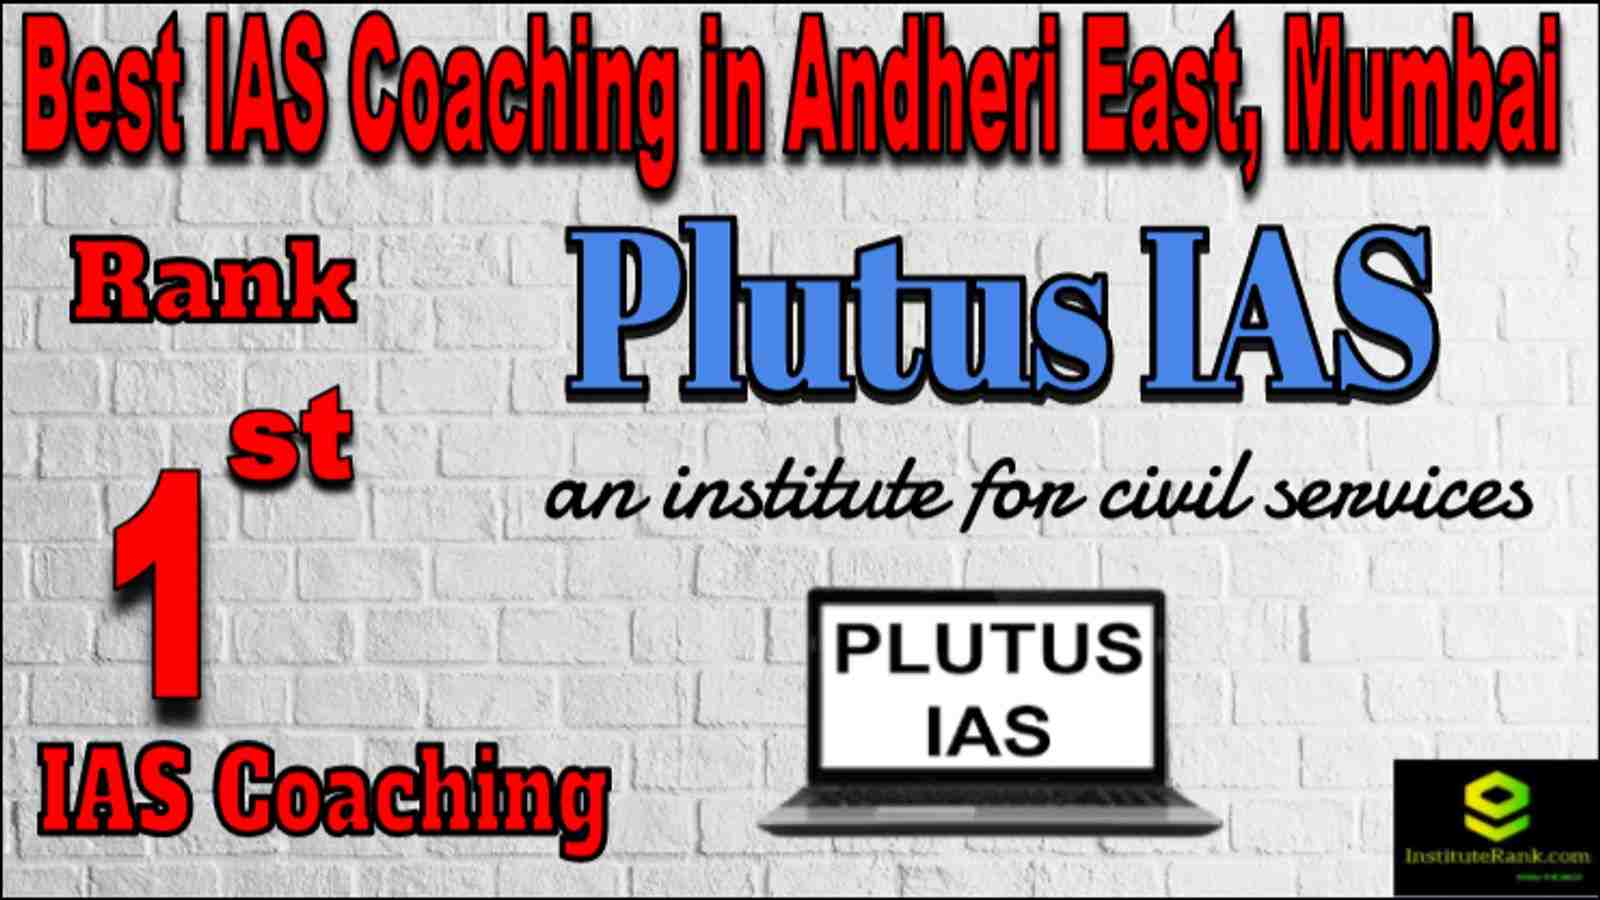 Rank 1 Best IAS coaching in Anderi East, Mumbai